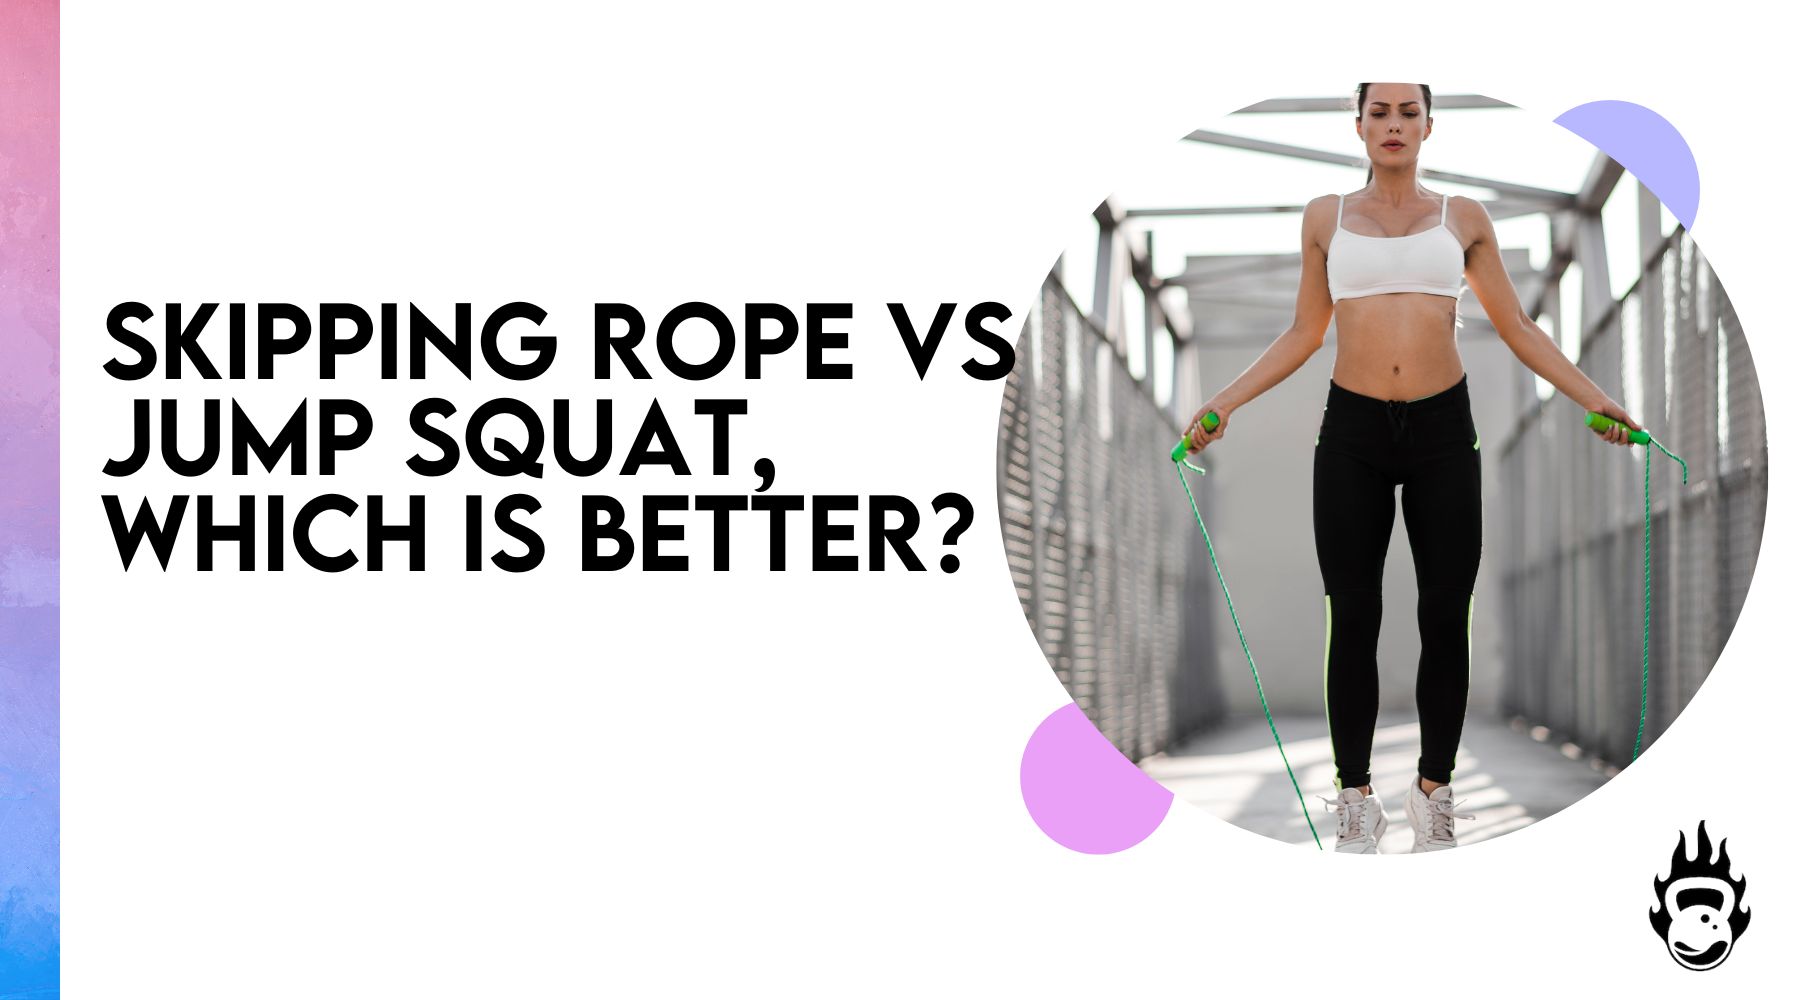 Is Jump Roping Better than Running?.